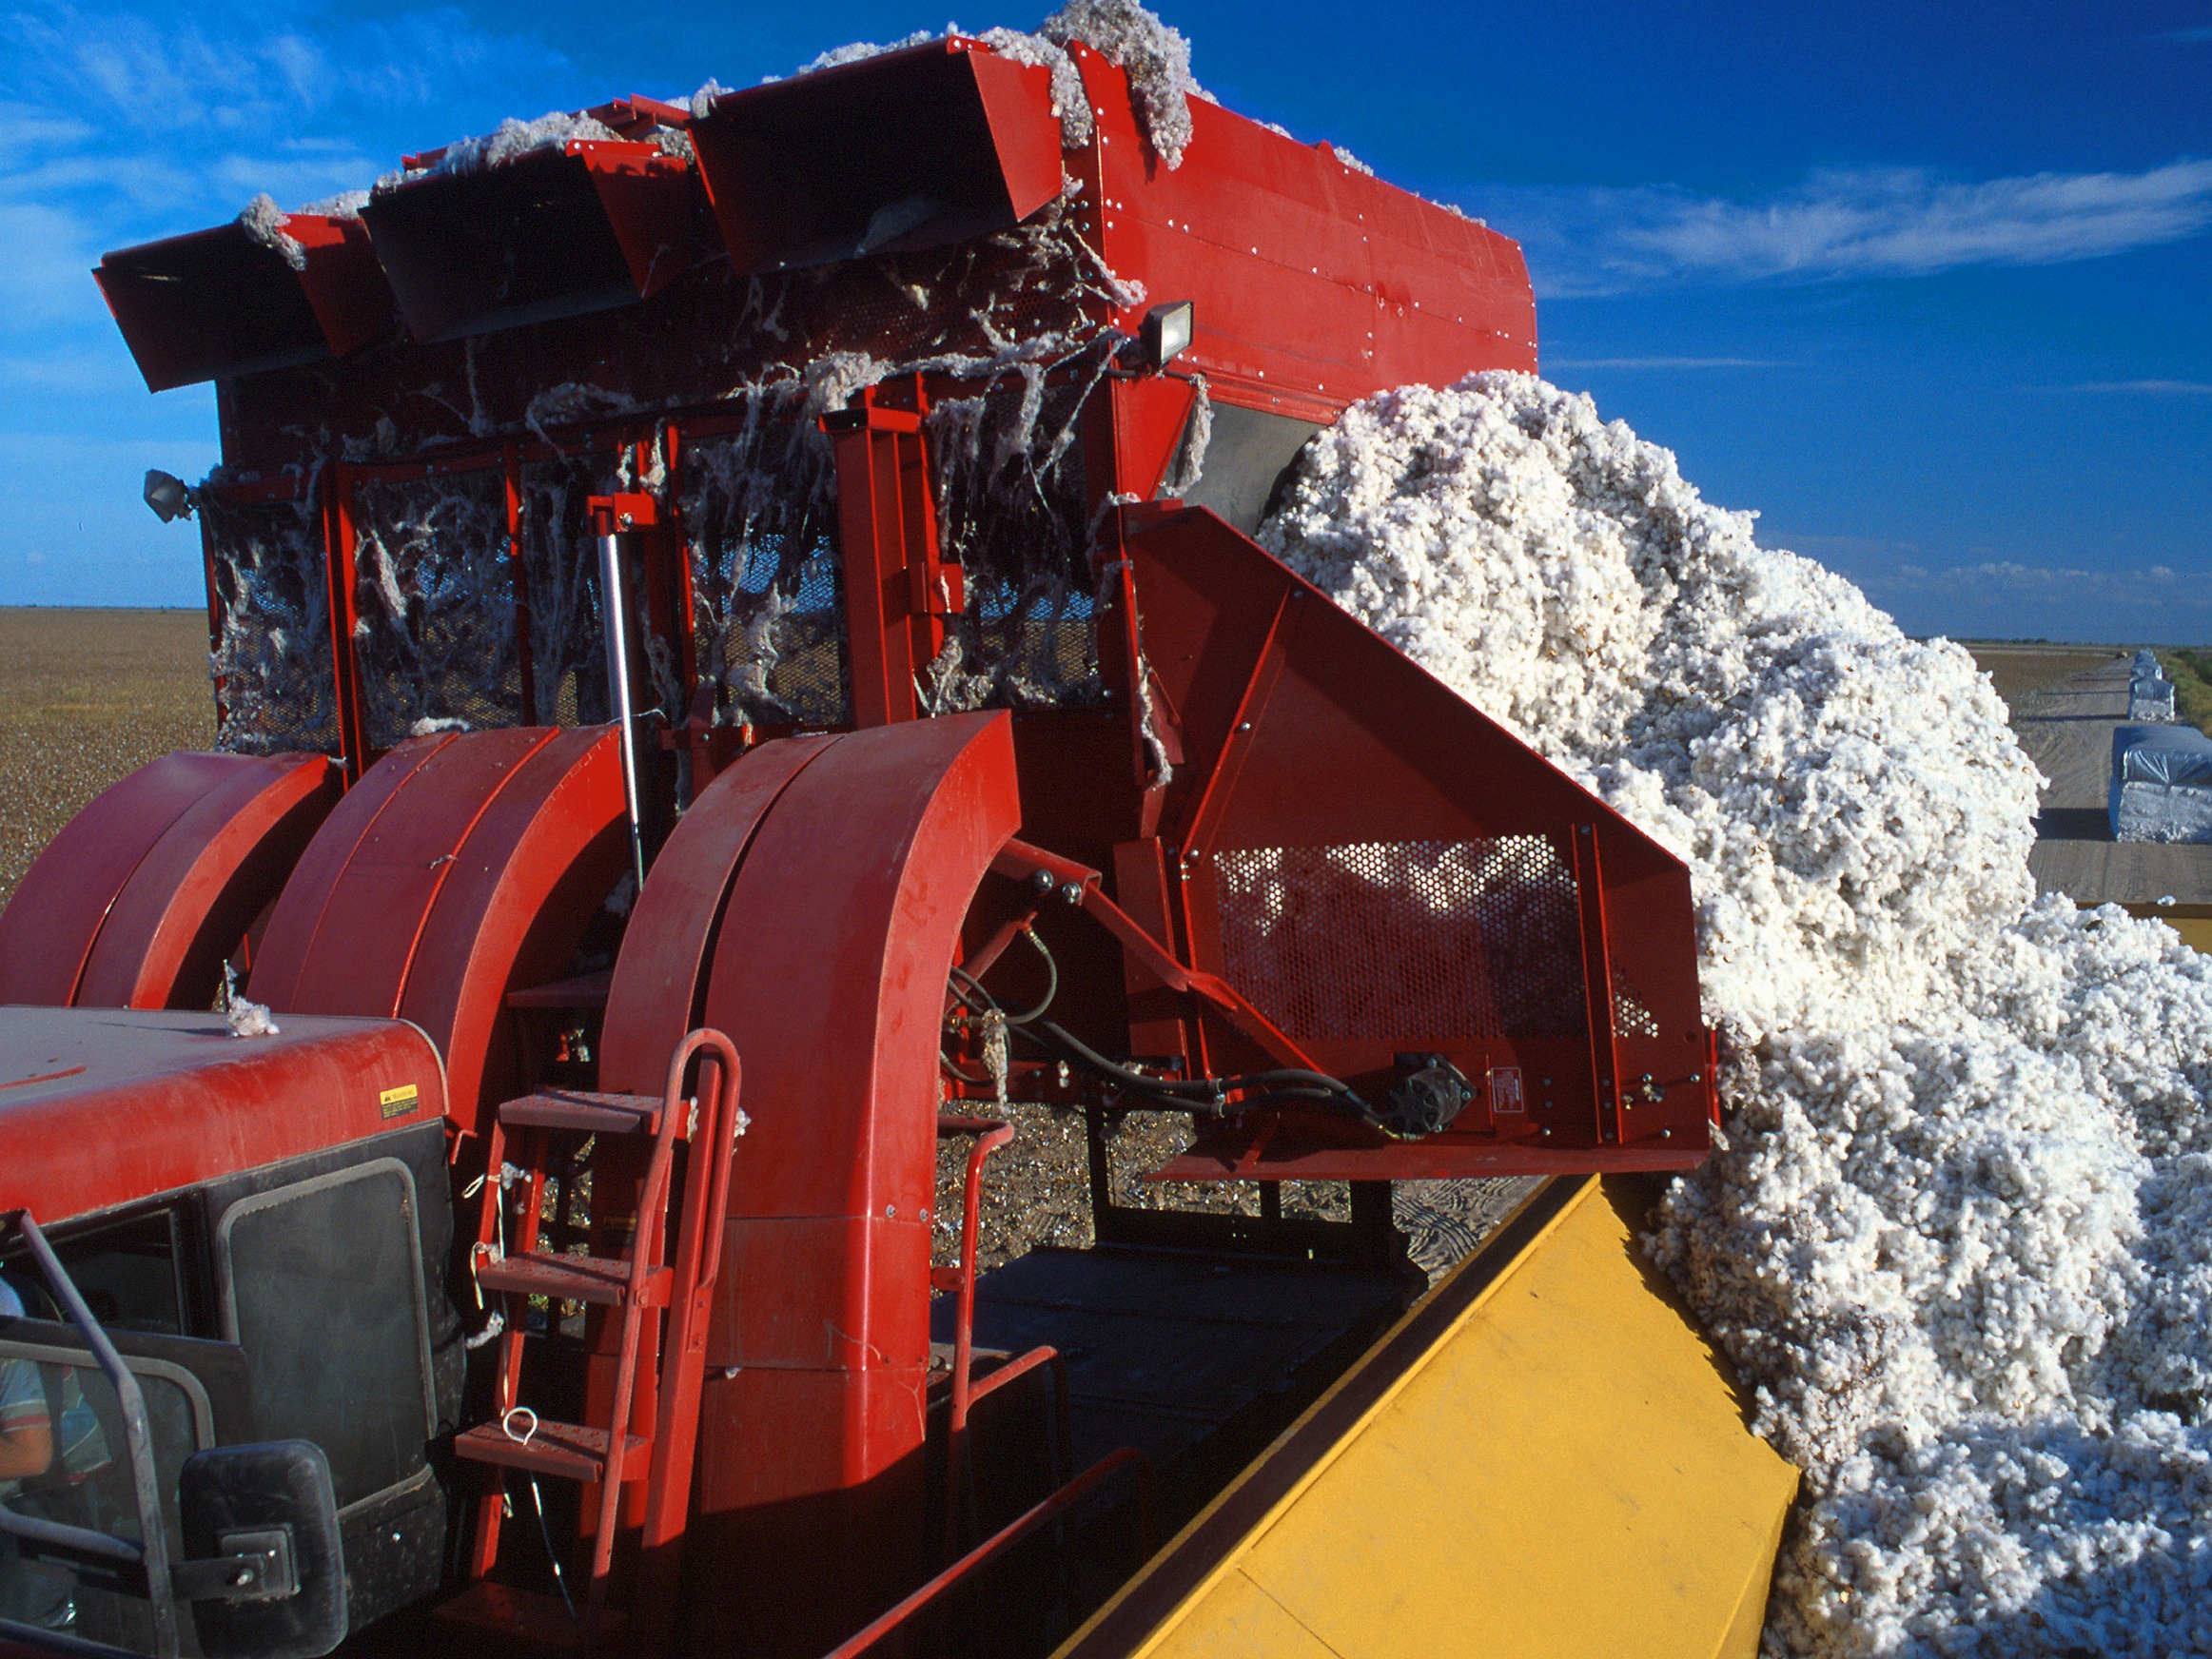 Cotton Production in Thousand Metric Tonnes: 3,553